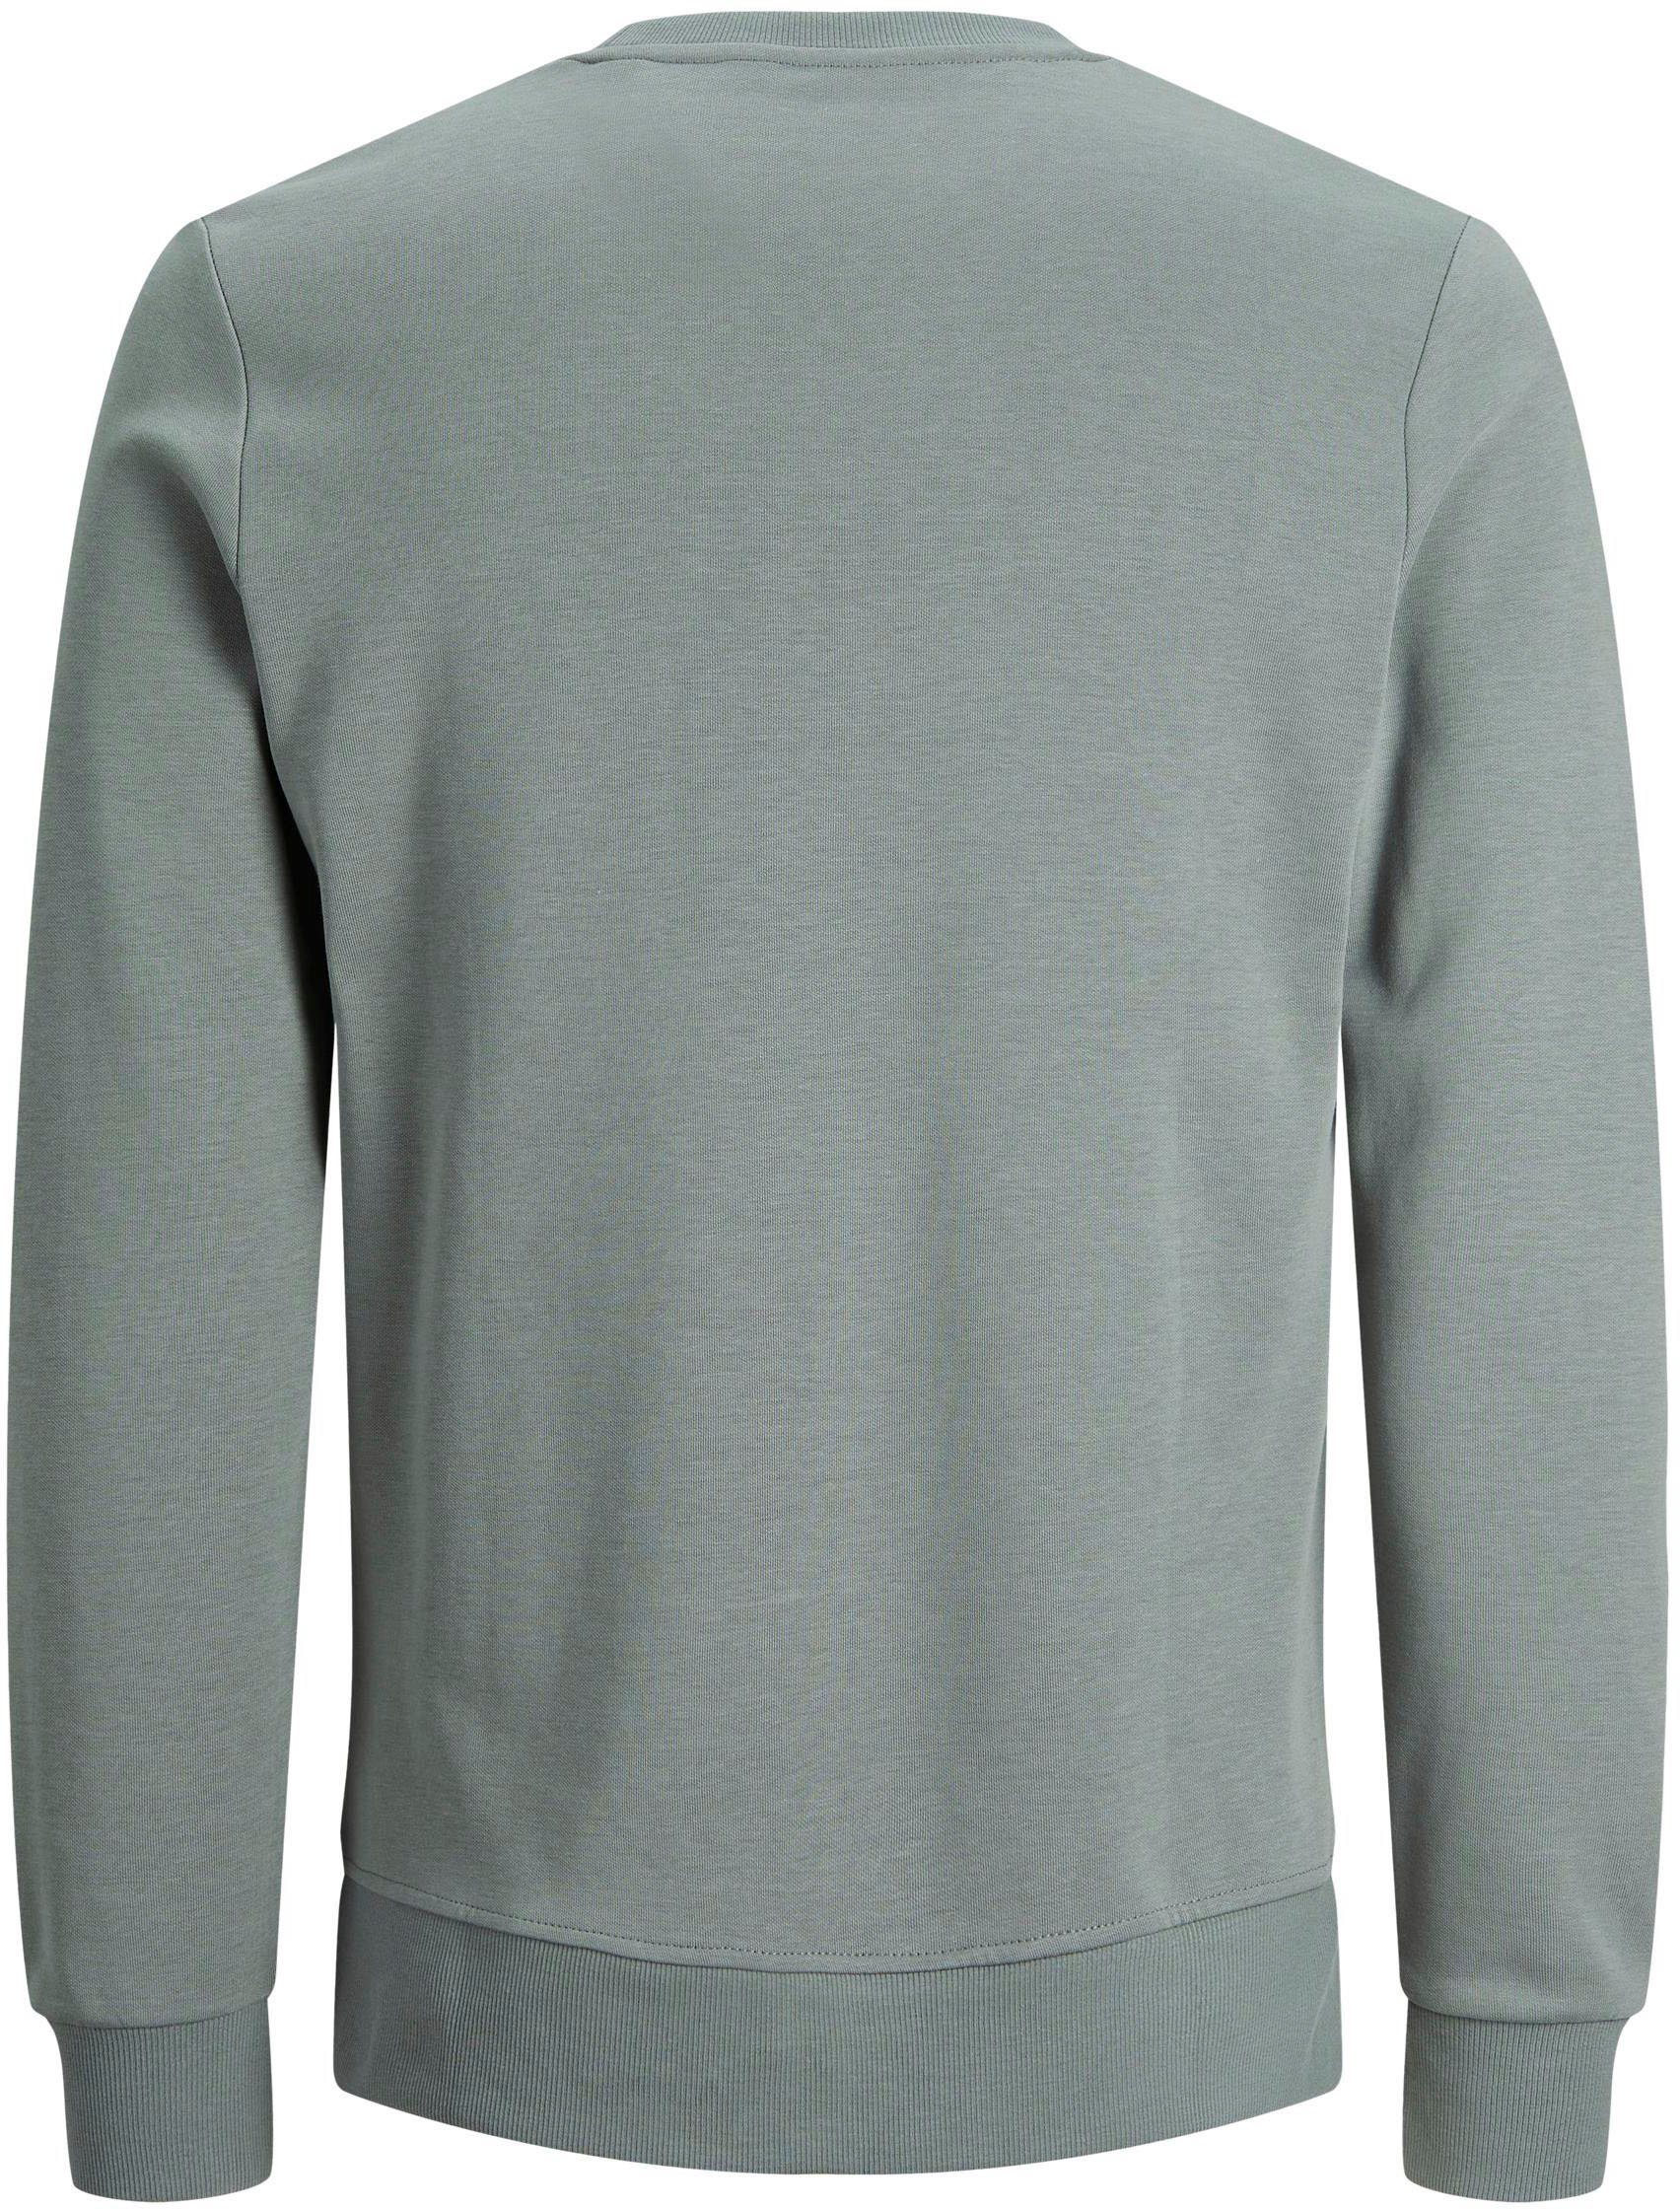 Jones & Jack SWEAT graugrün BASIC Sweatshirt